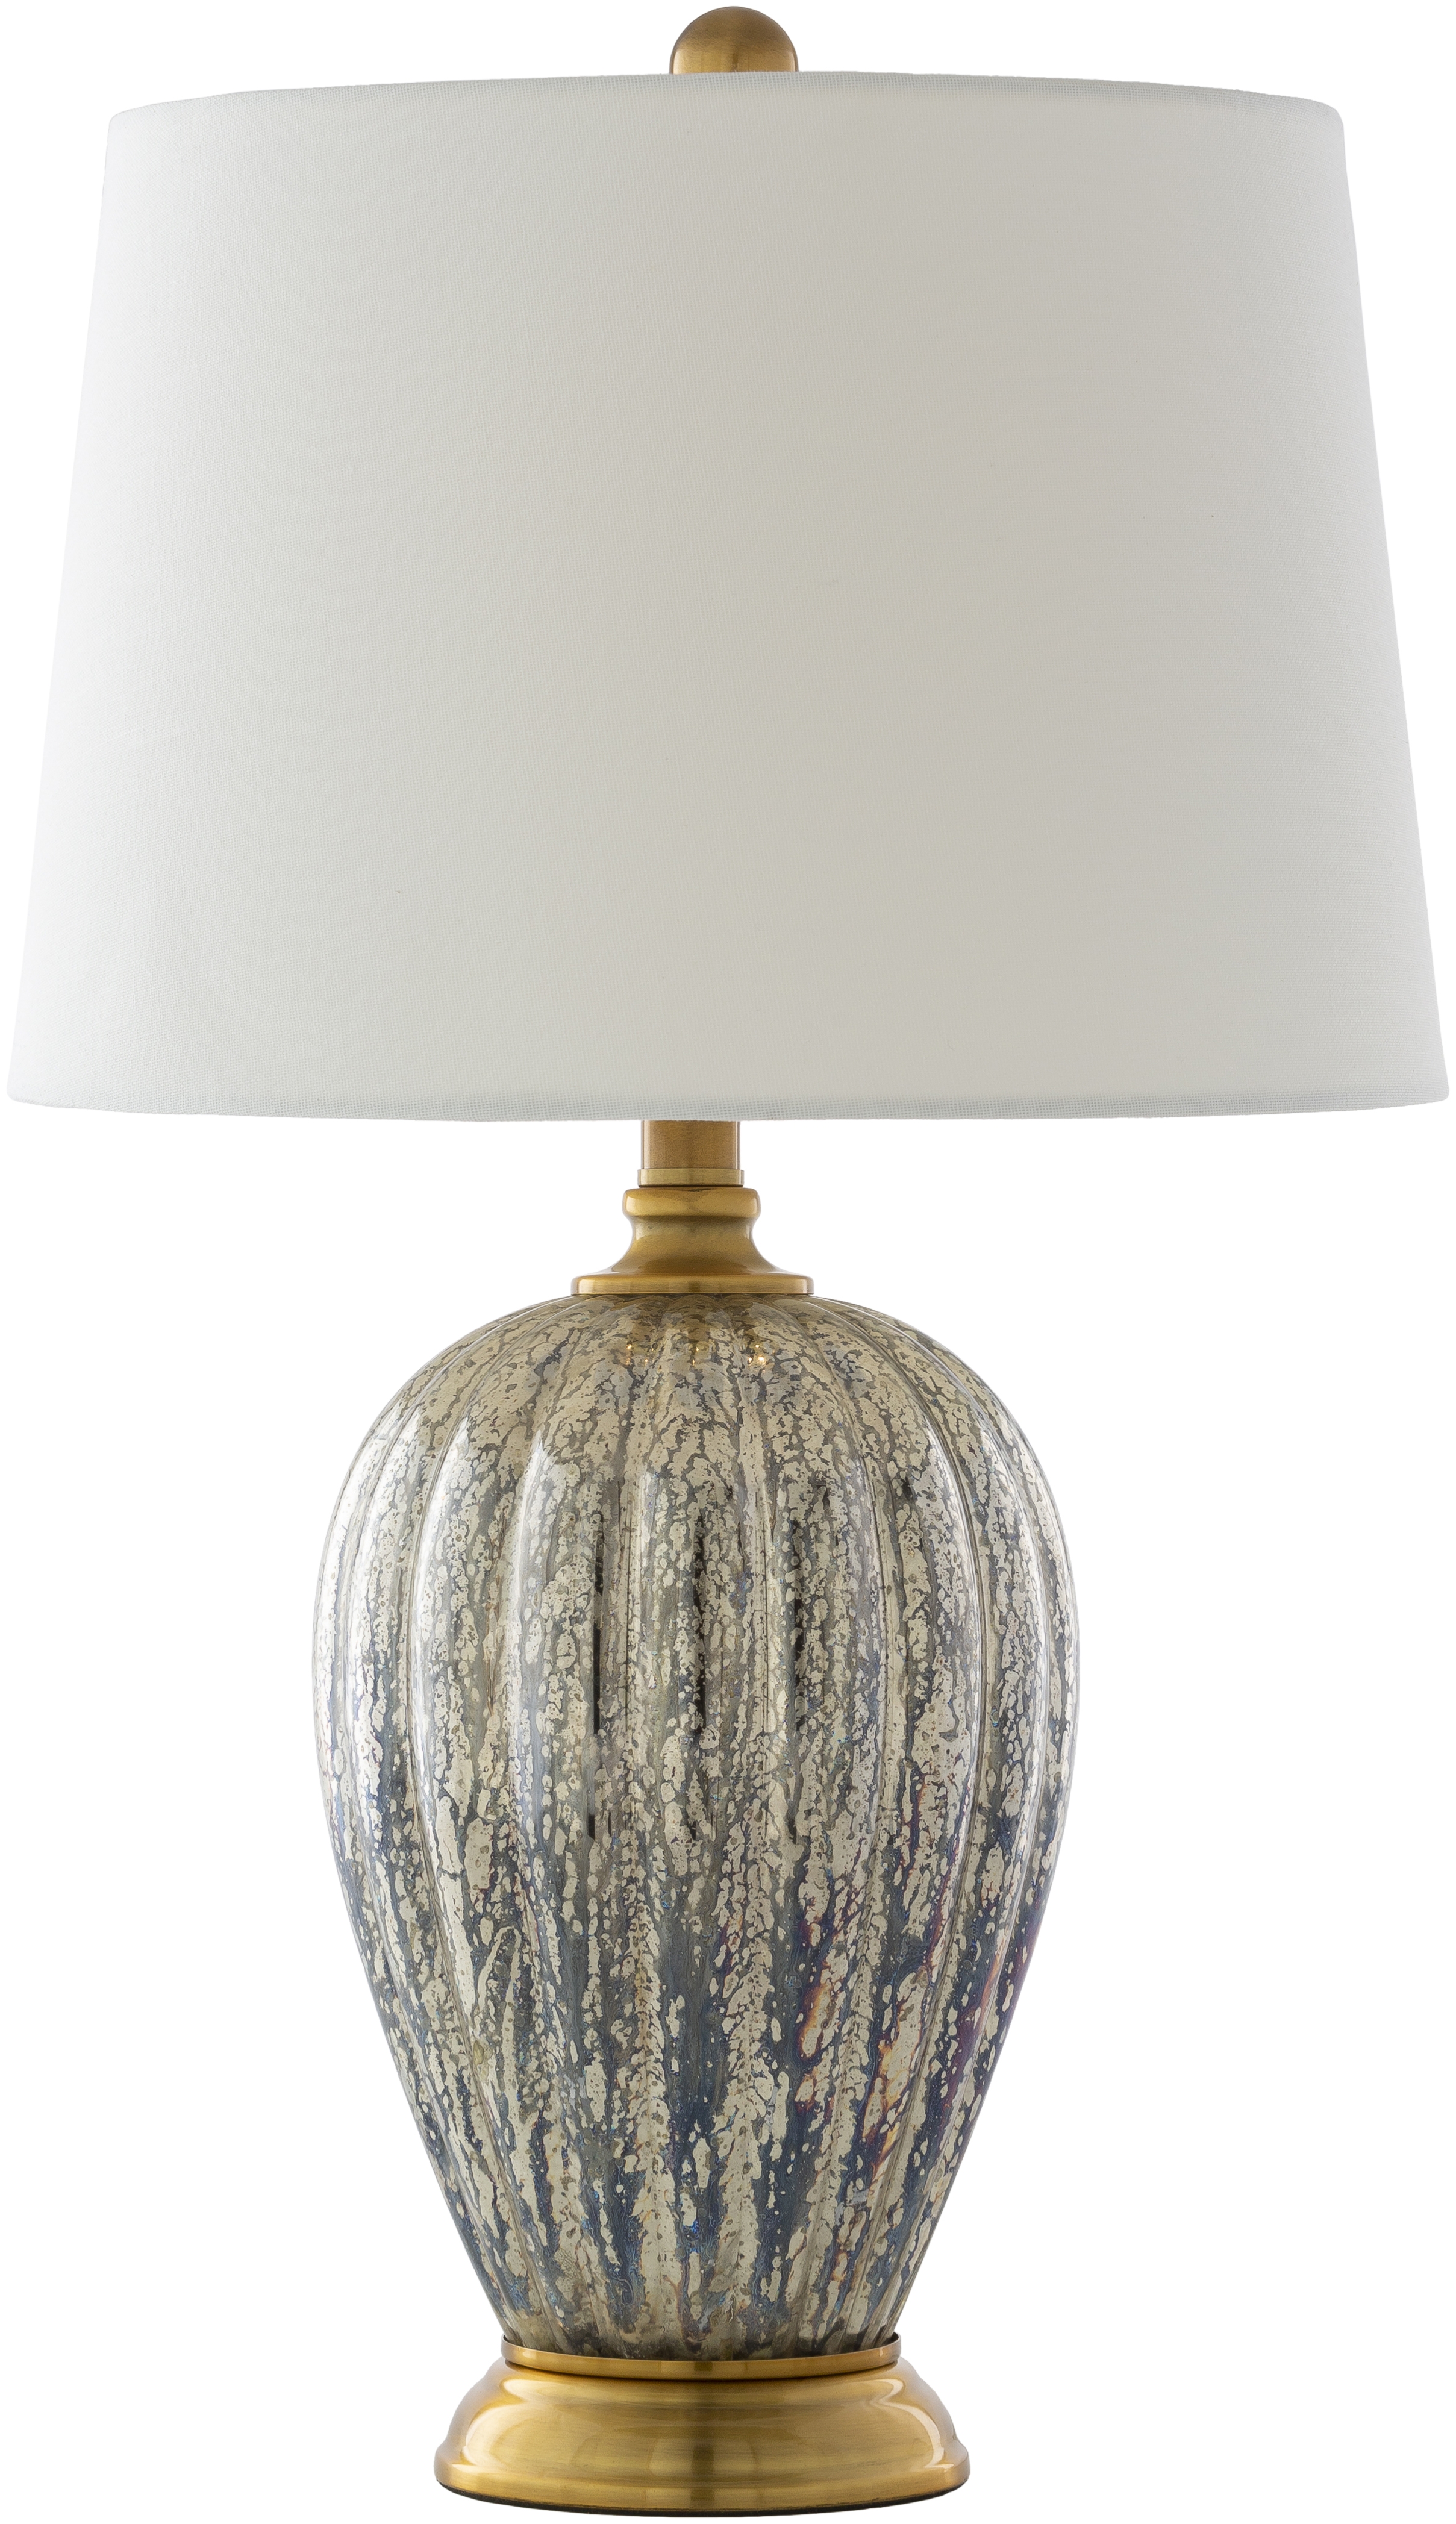 Abram Table Lamp - Image 0